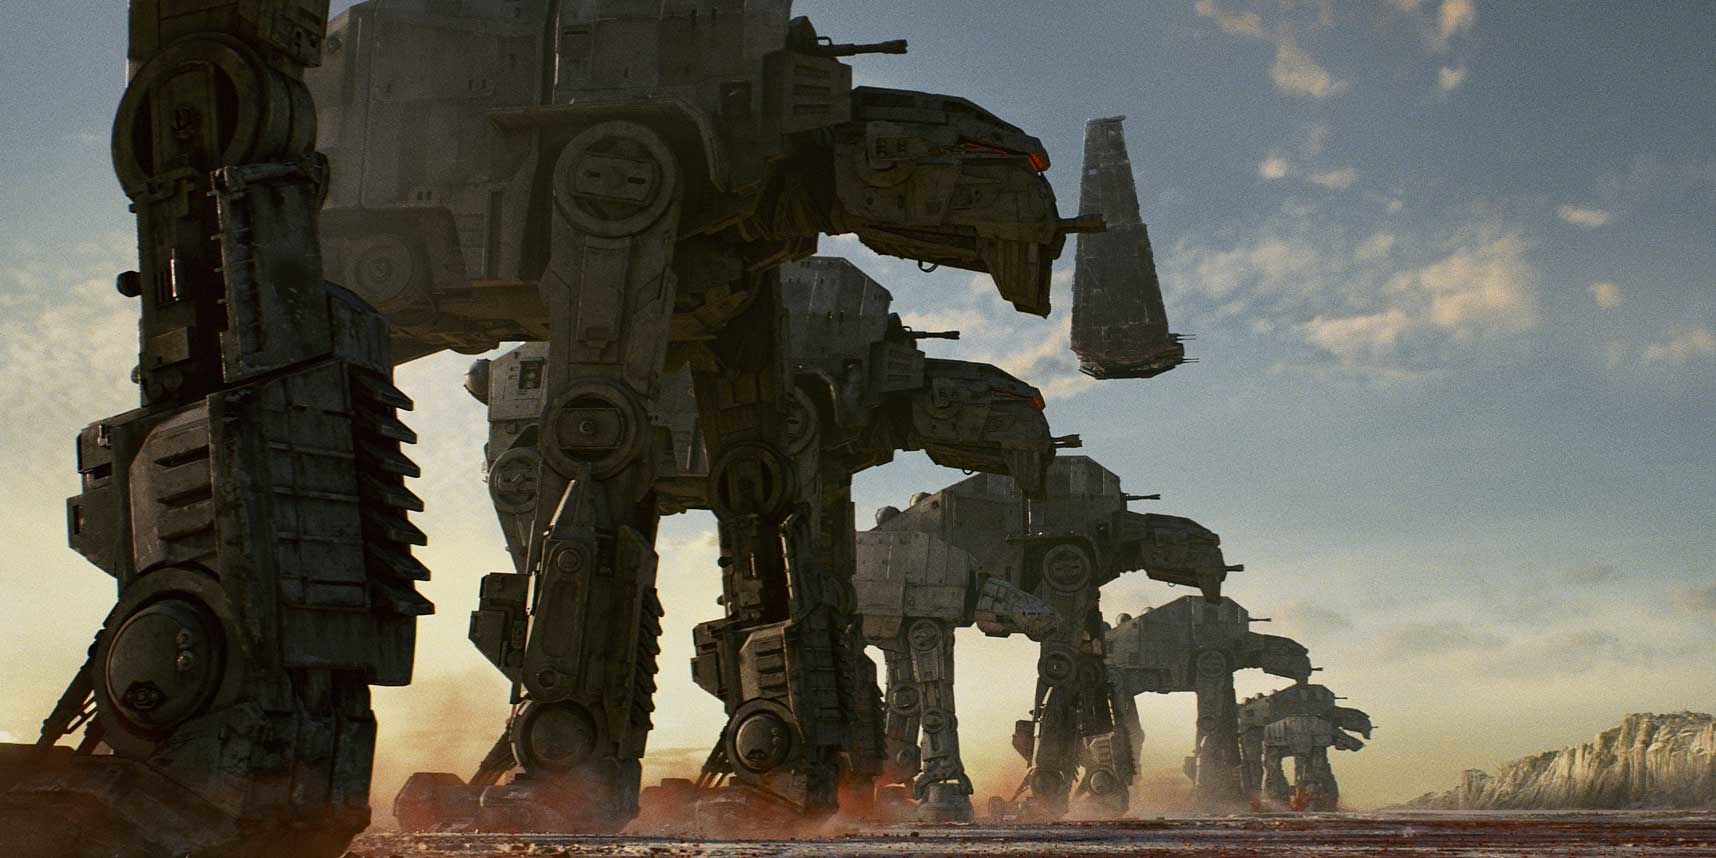 Star Wars The Last Jedi Visual Effects Oscars 2018 predictions